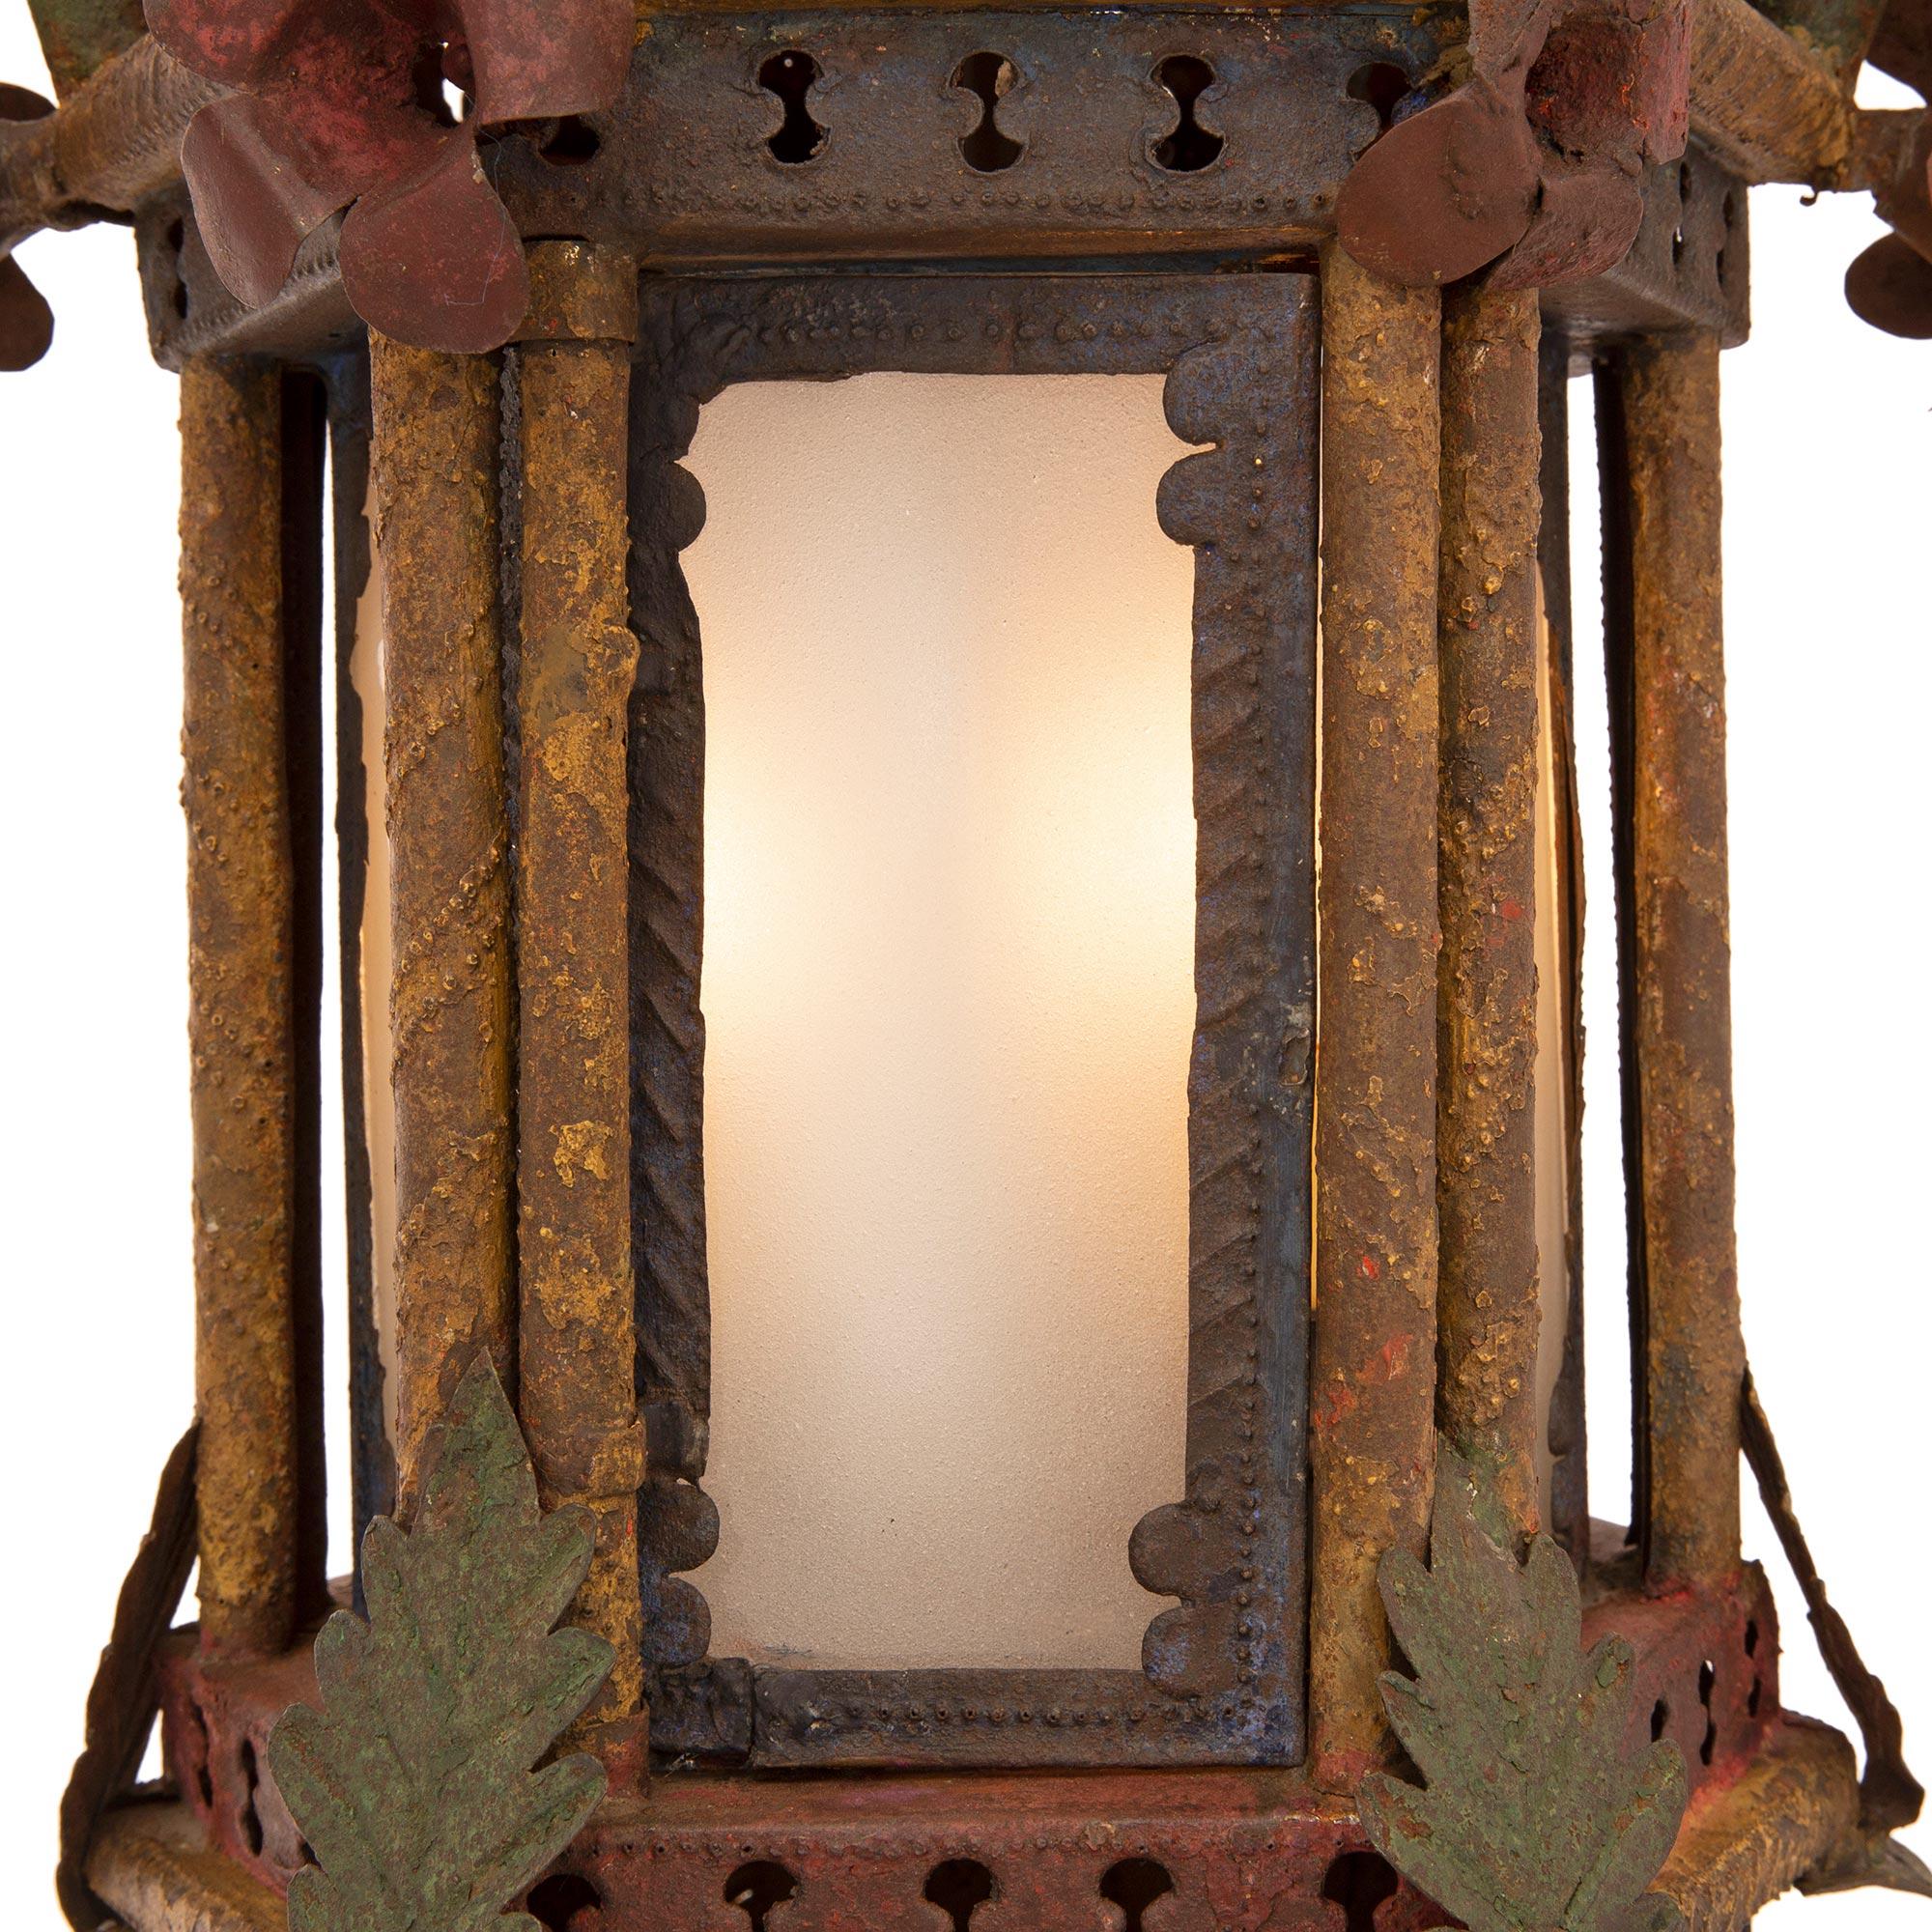 18th century lanterns